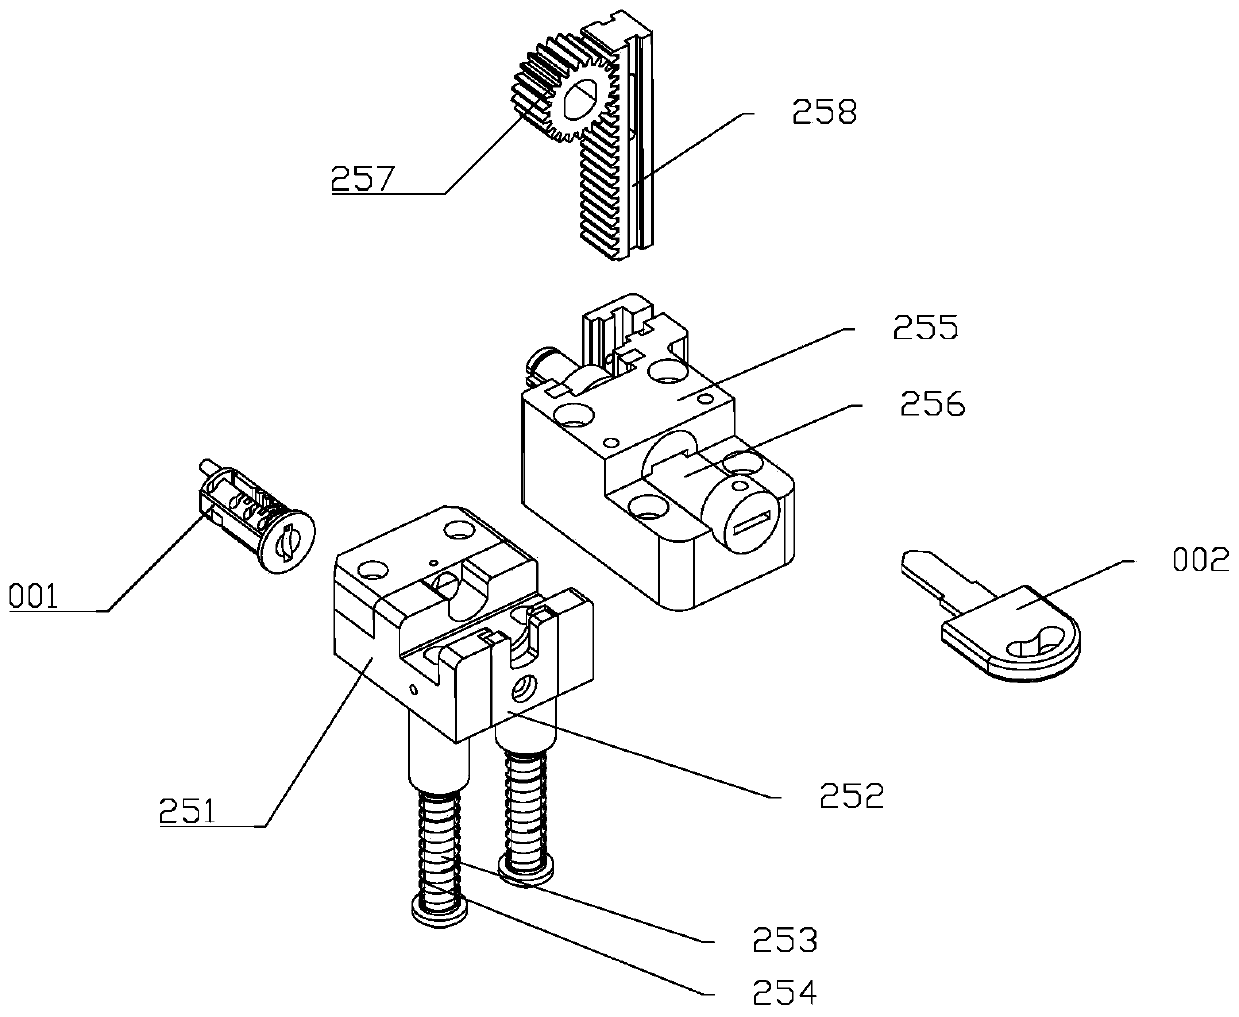 Lock plug spring and lock plate assembling machine and assembling method